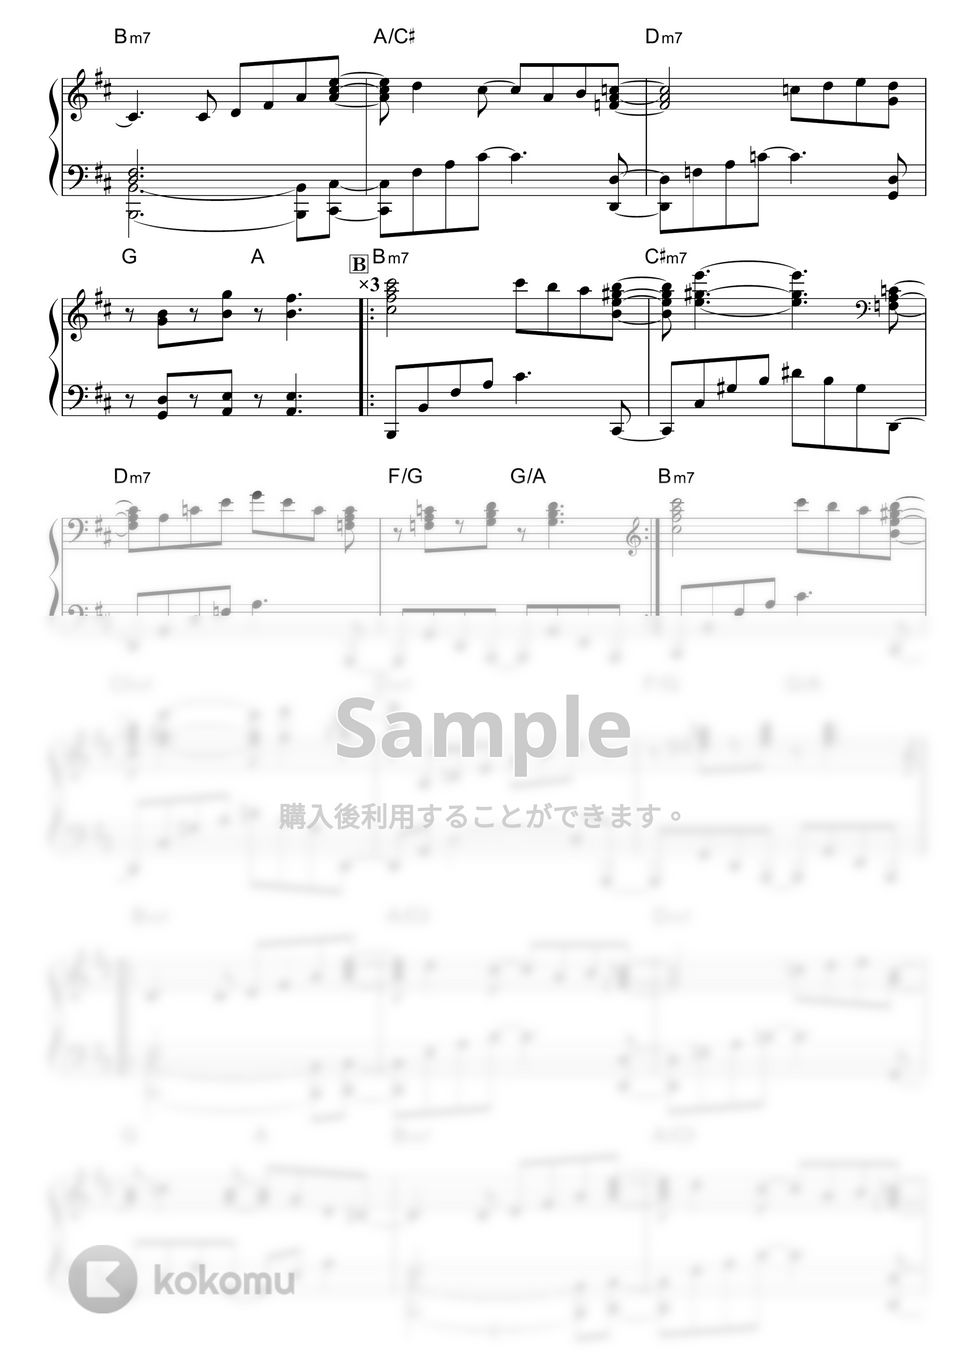 PRIMITIVE ART ORCHESTRA - Blue Mist by piano*score